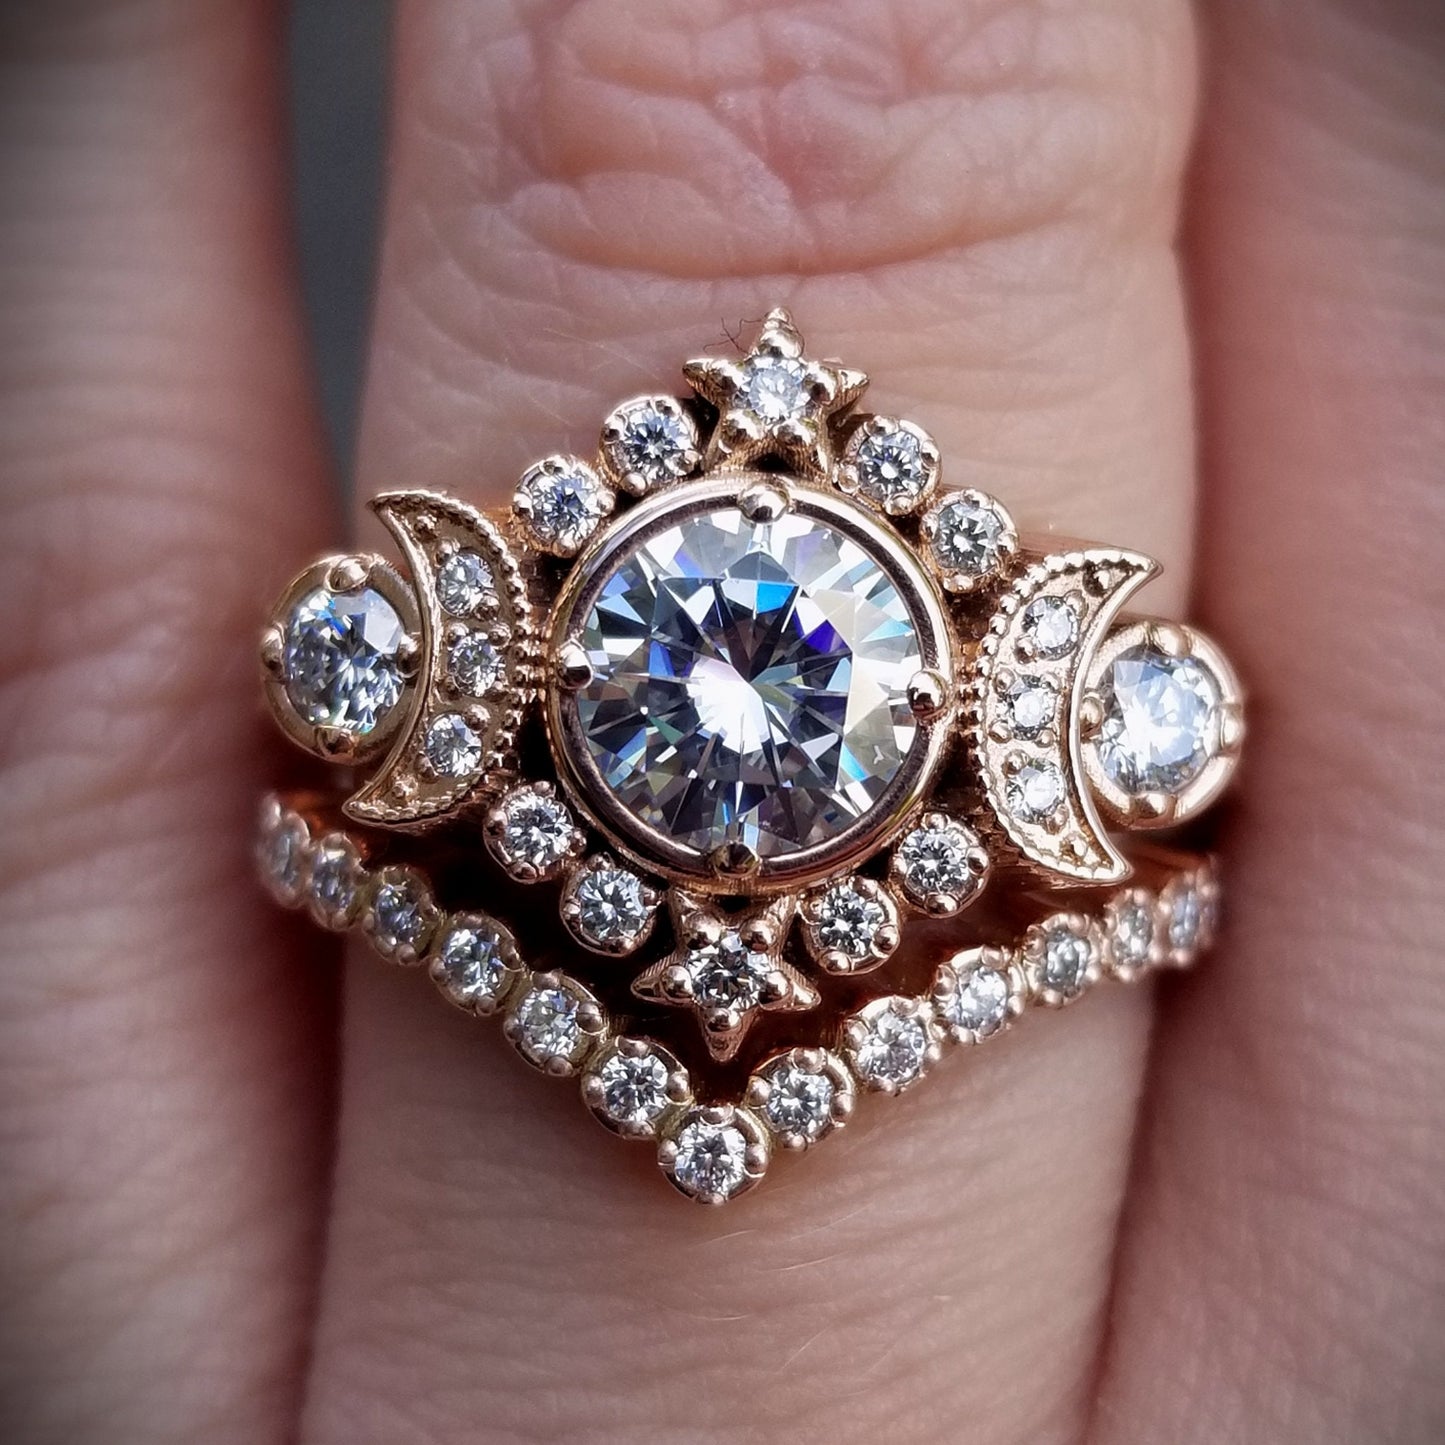 Selene Moon Phase Goddess Engagement Ring Set - Moissanite or Galaxy Diamond Lunar Boho Wedding Ring -14k Rose, Yellow or White Gold